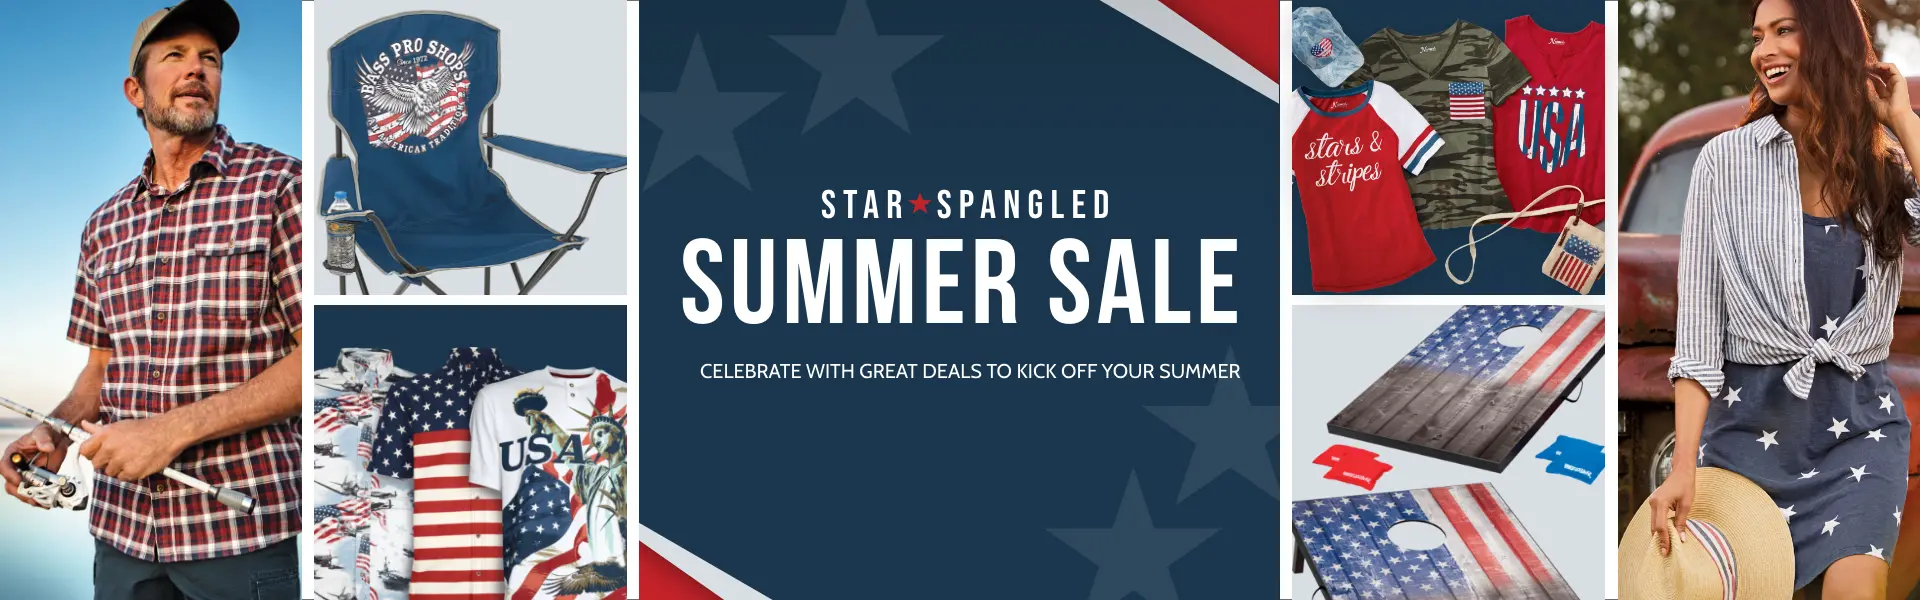 Star Spangled Summer Sale